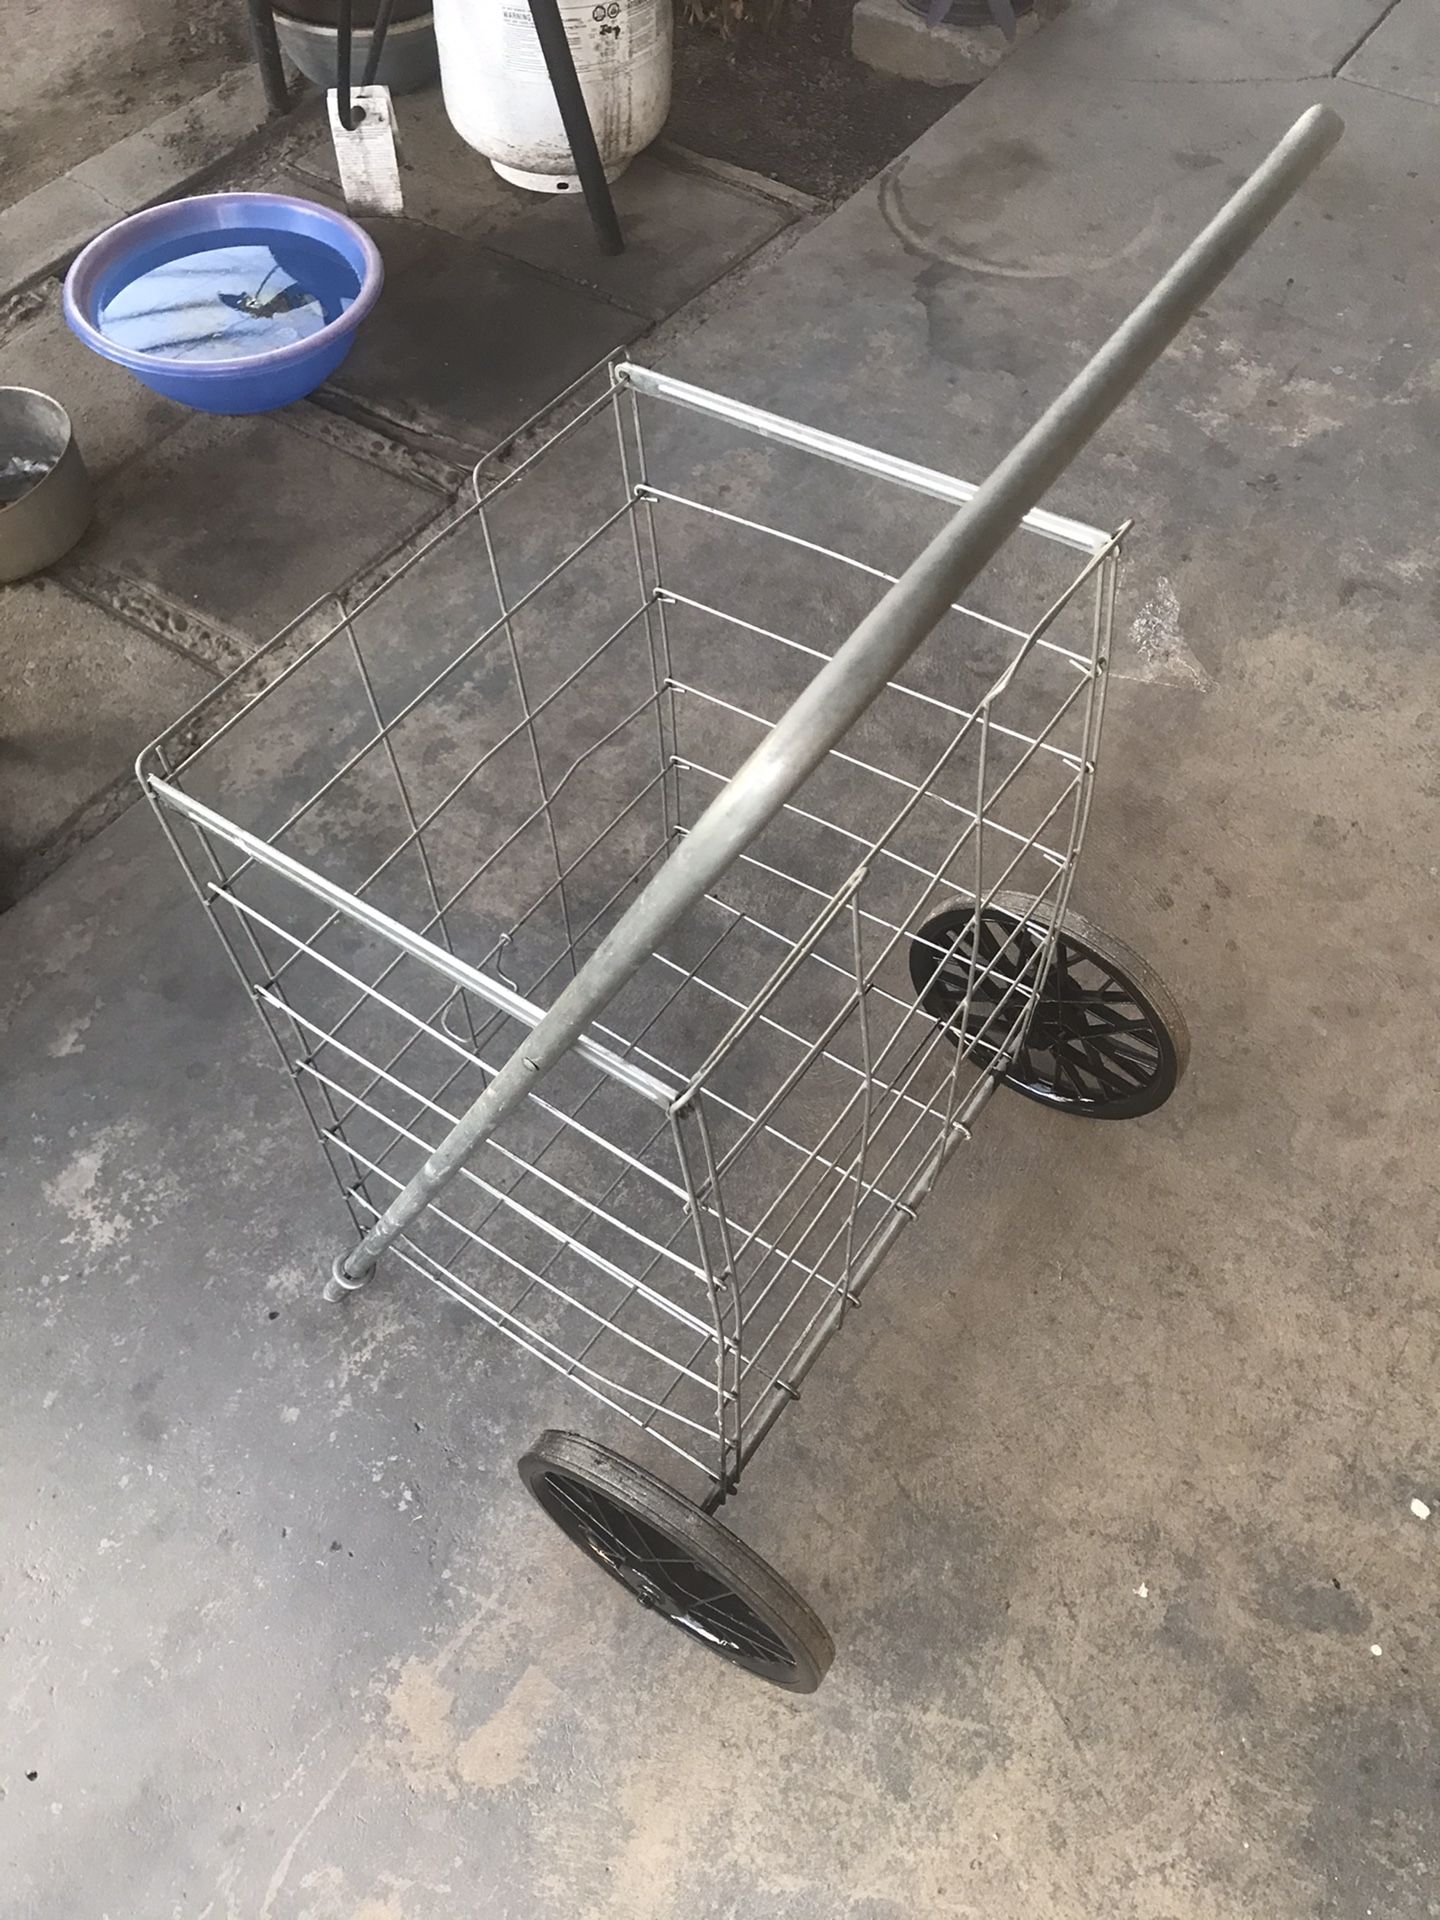 Utility cart